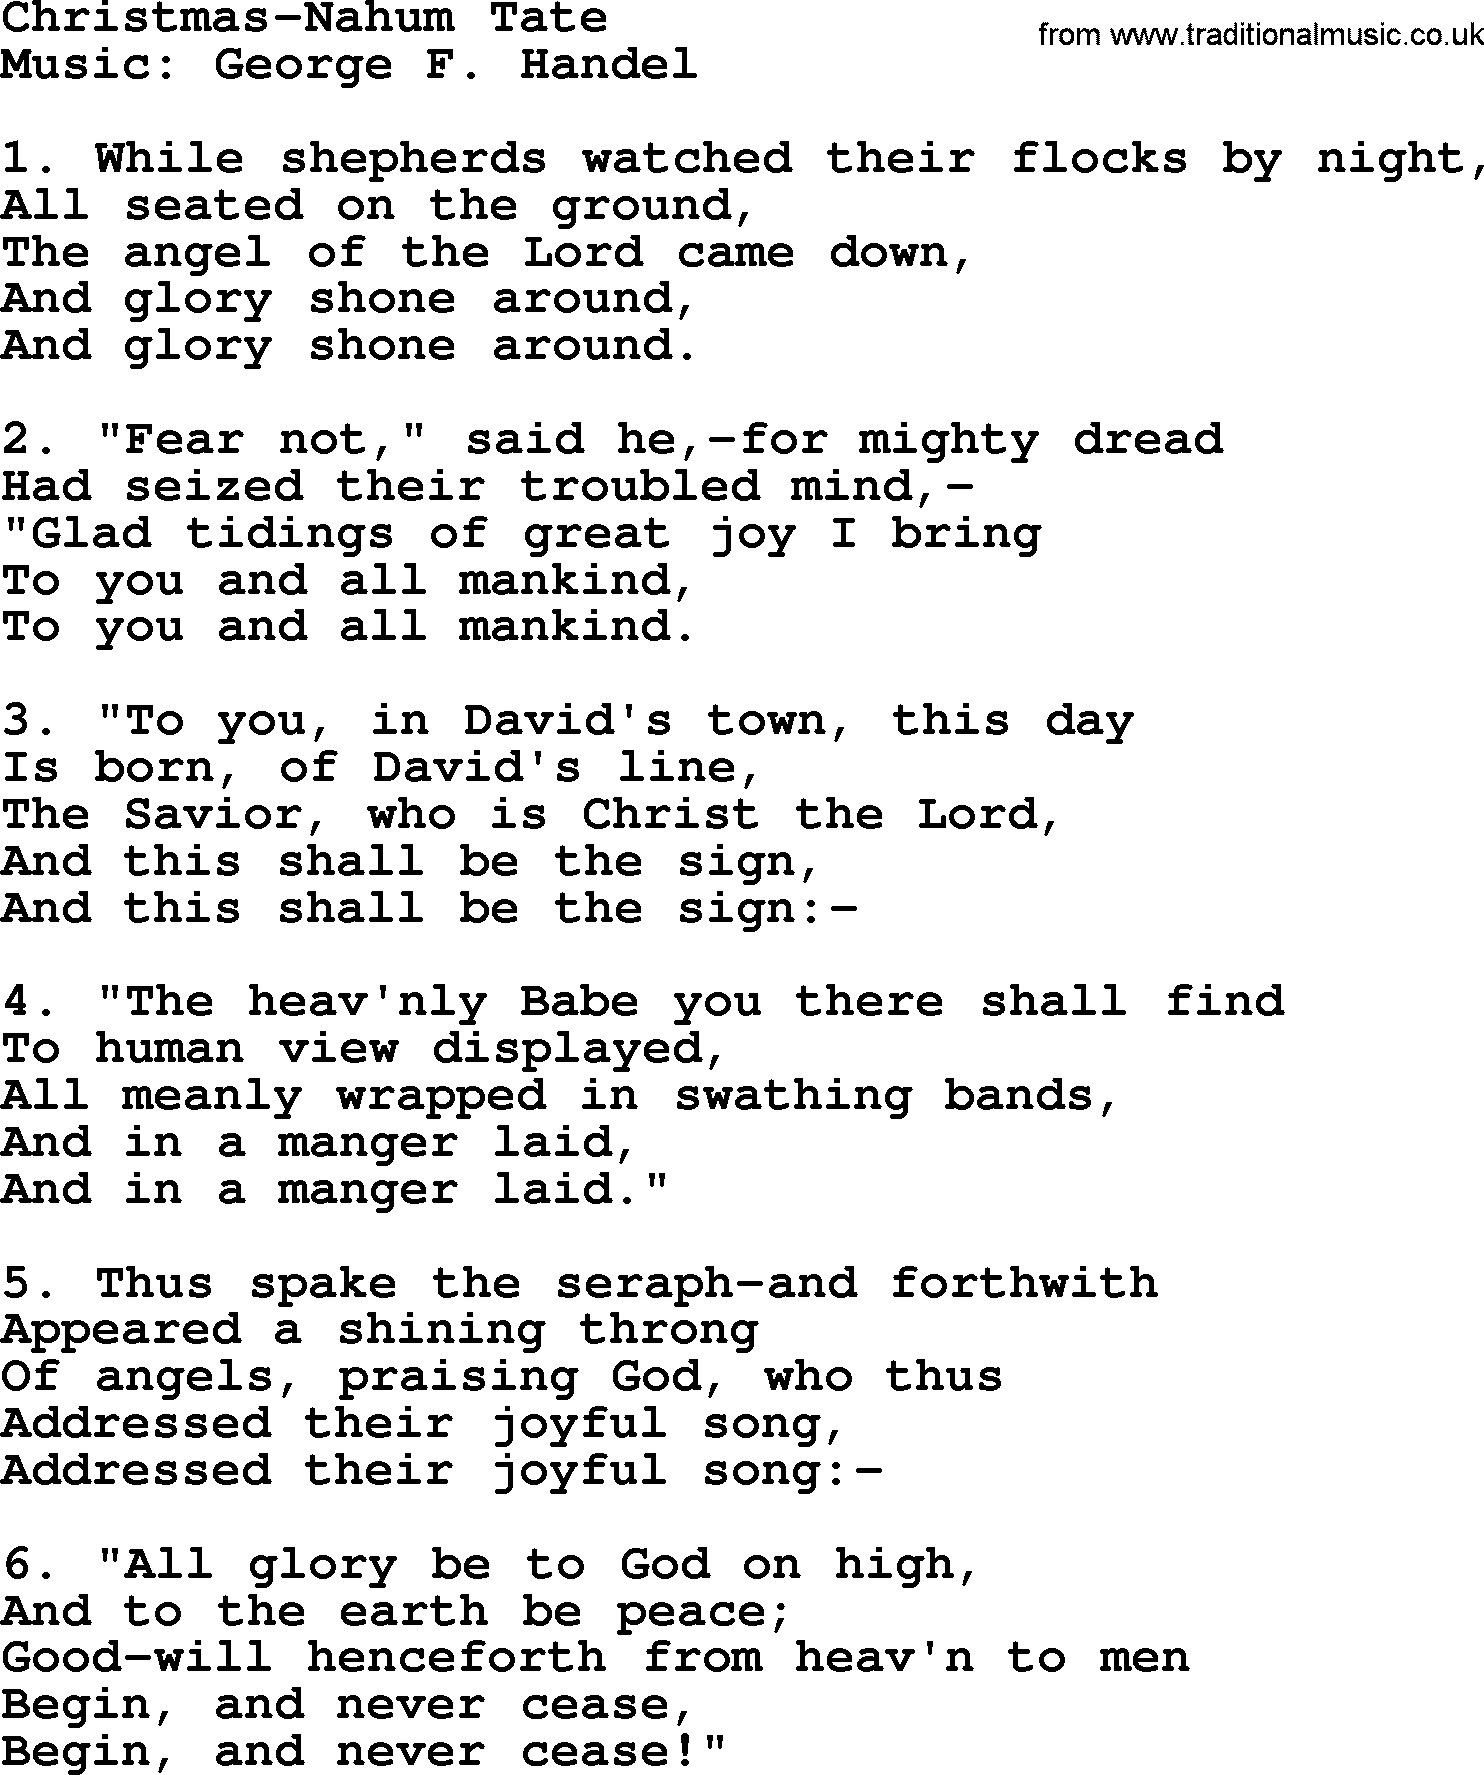 Hymns about Angels, Hymn: Christmas-nahum Tate.txt lyrics with PDF